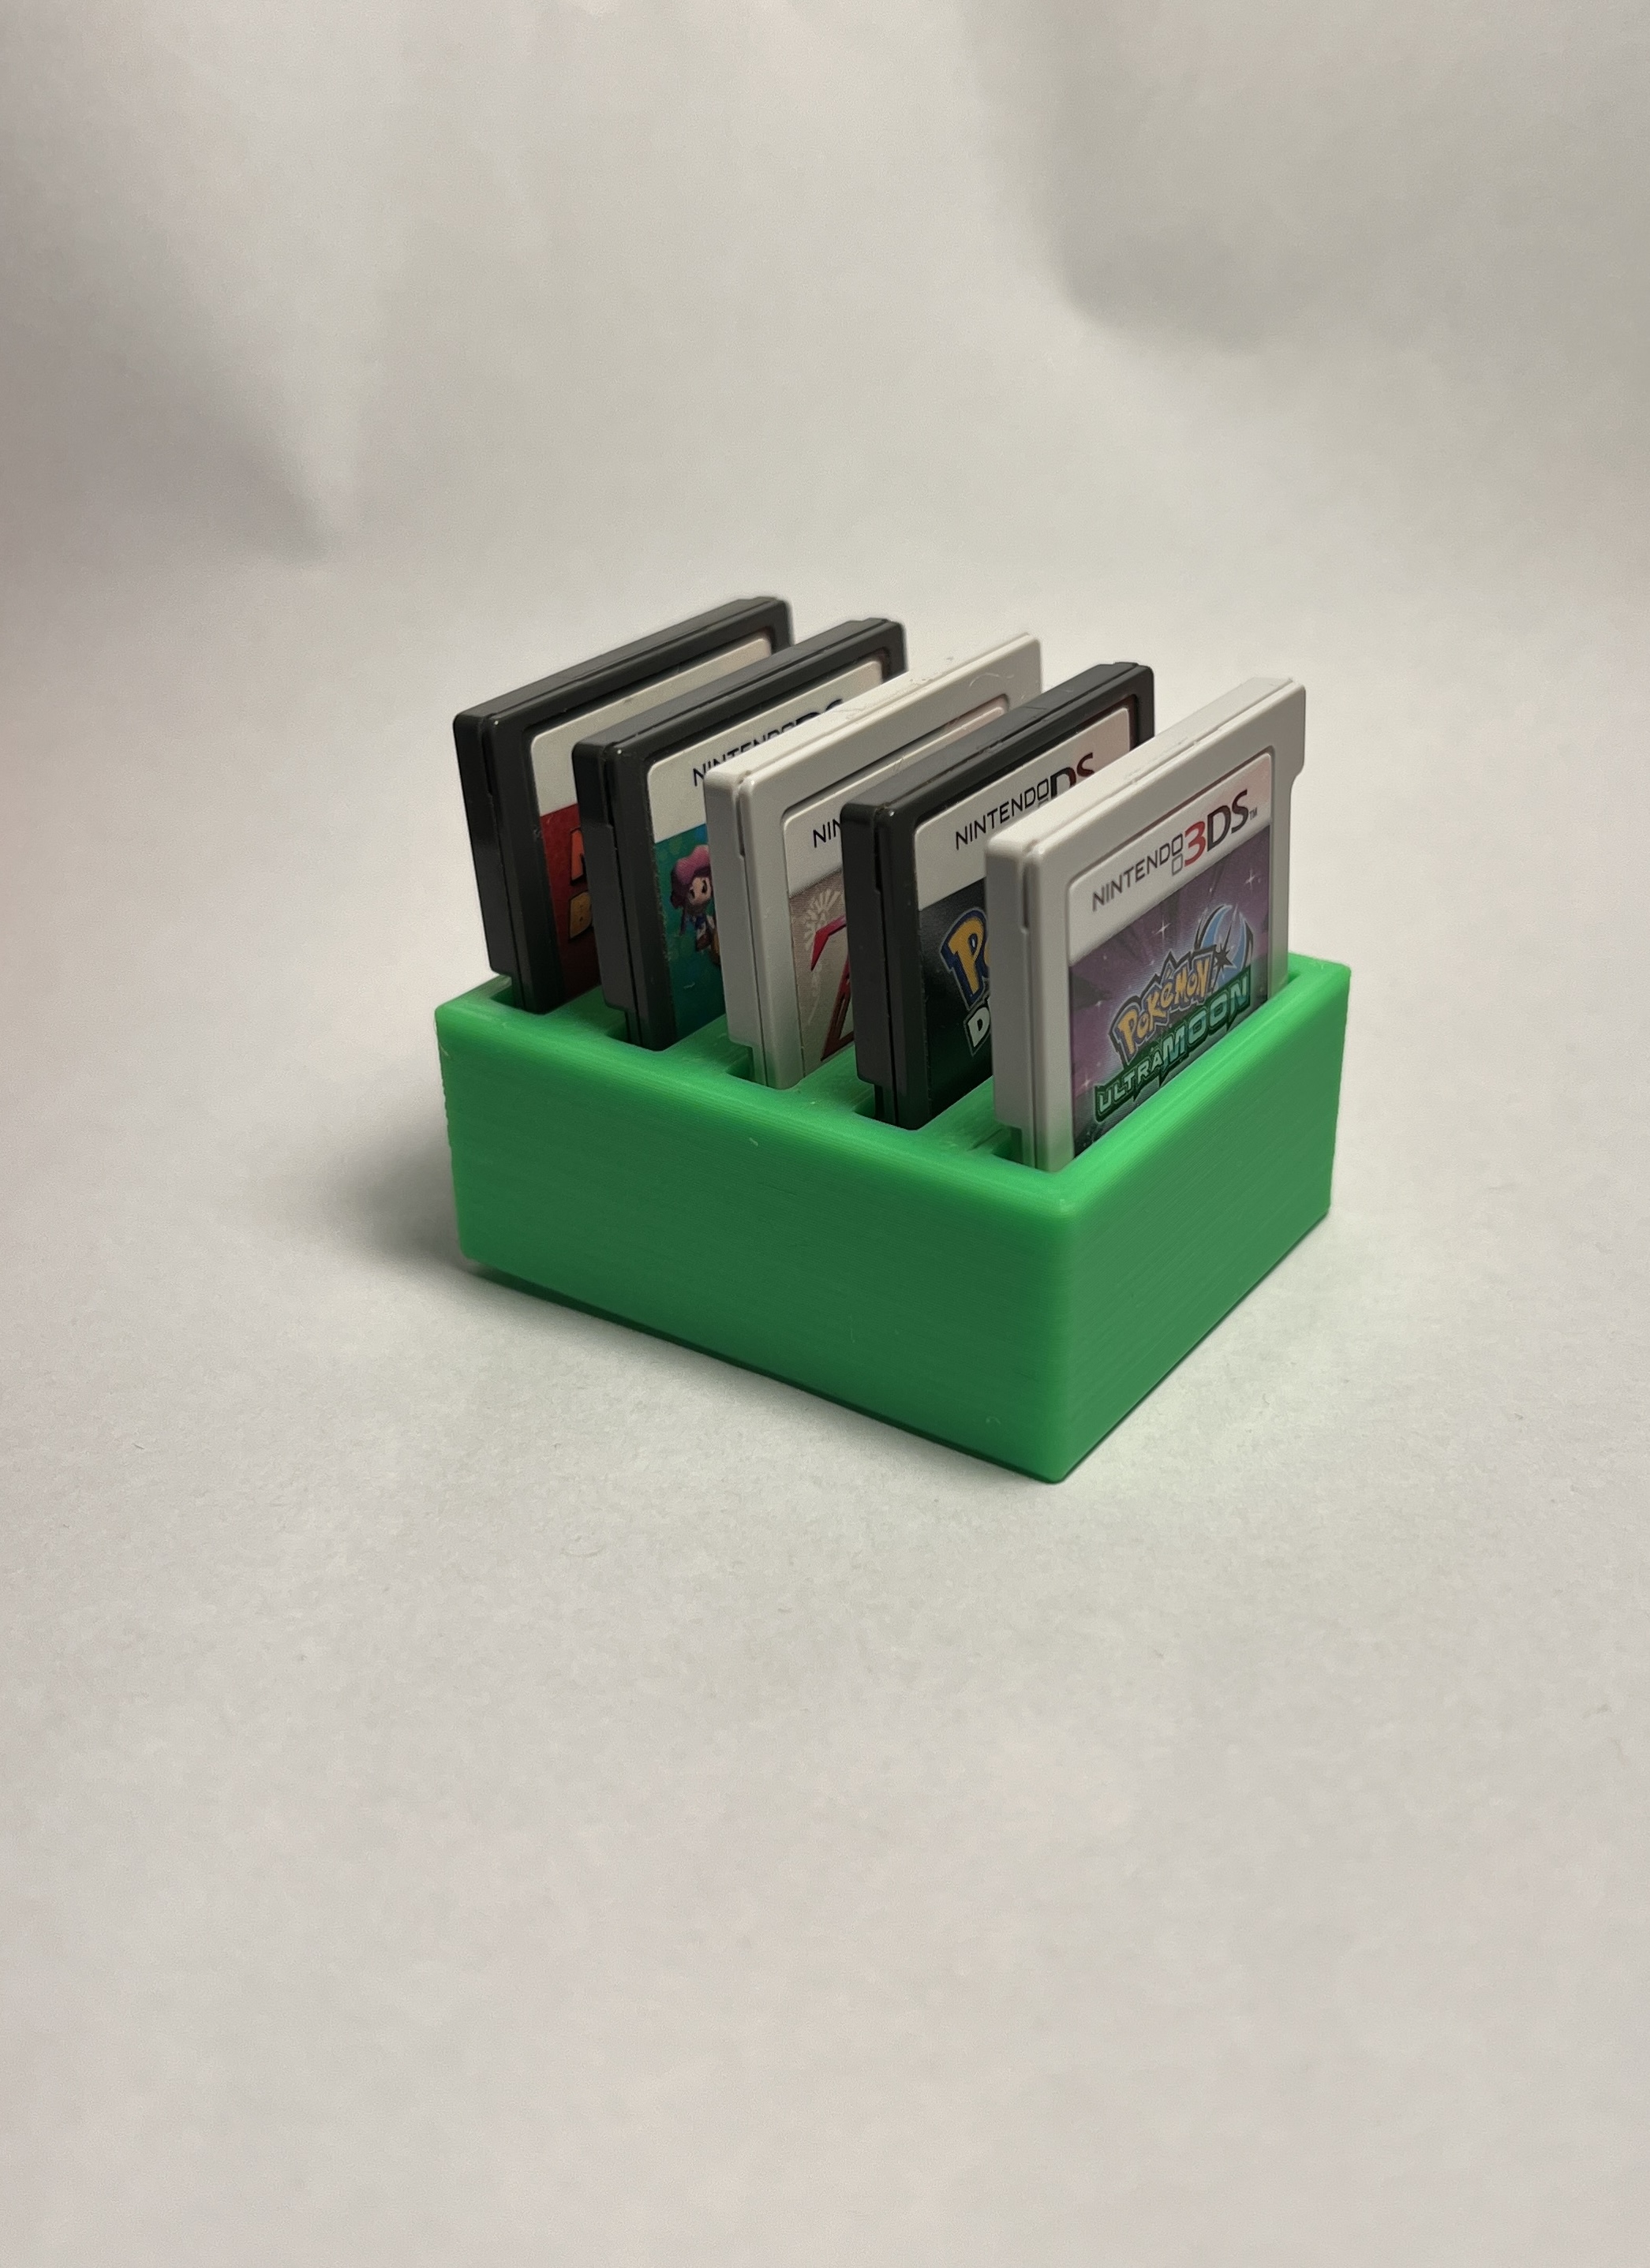 Nintendo Ds cartridge holder